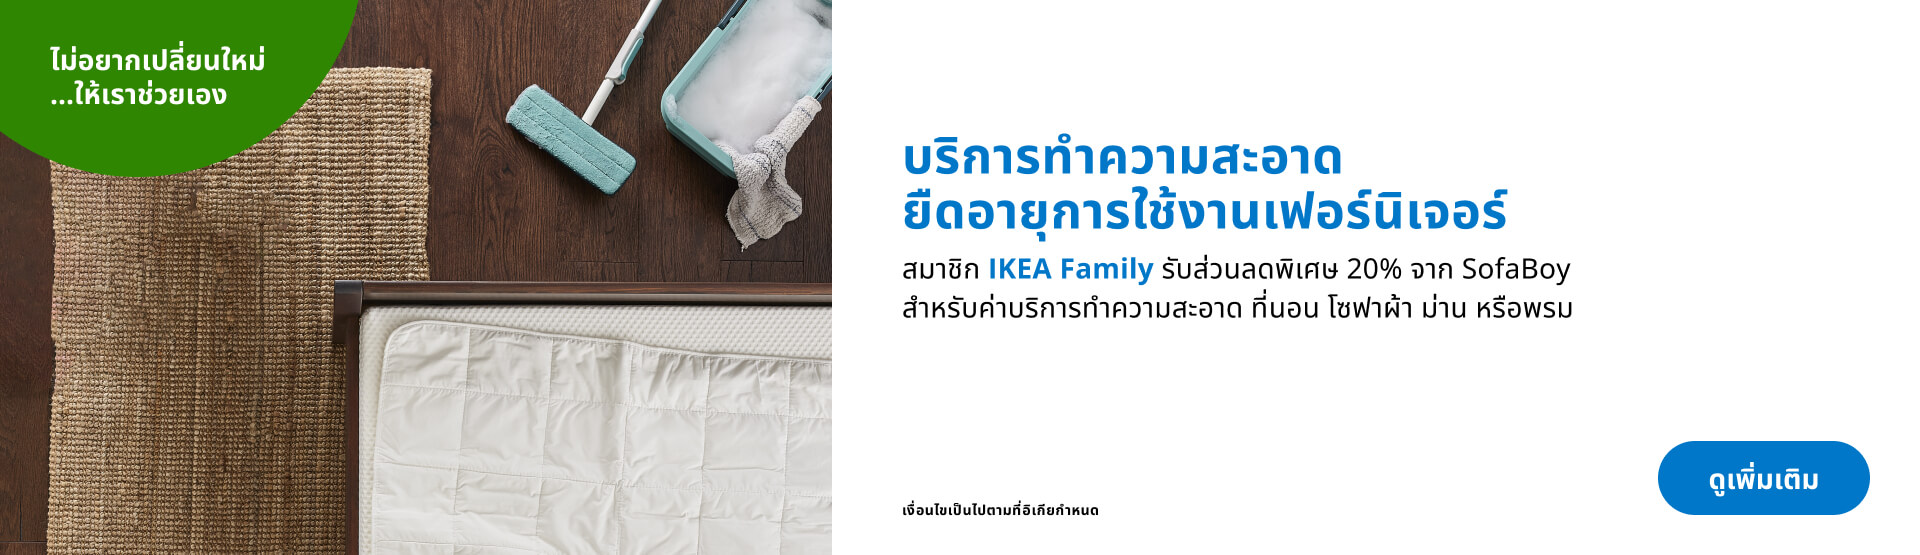 IKEA Family Thailand - Sofaboy